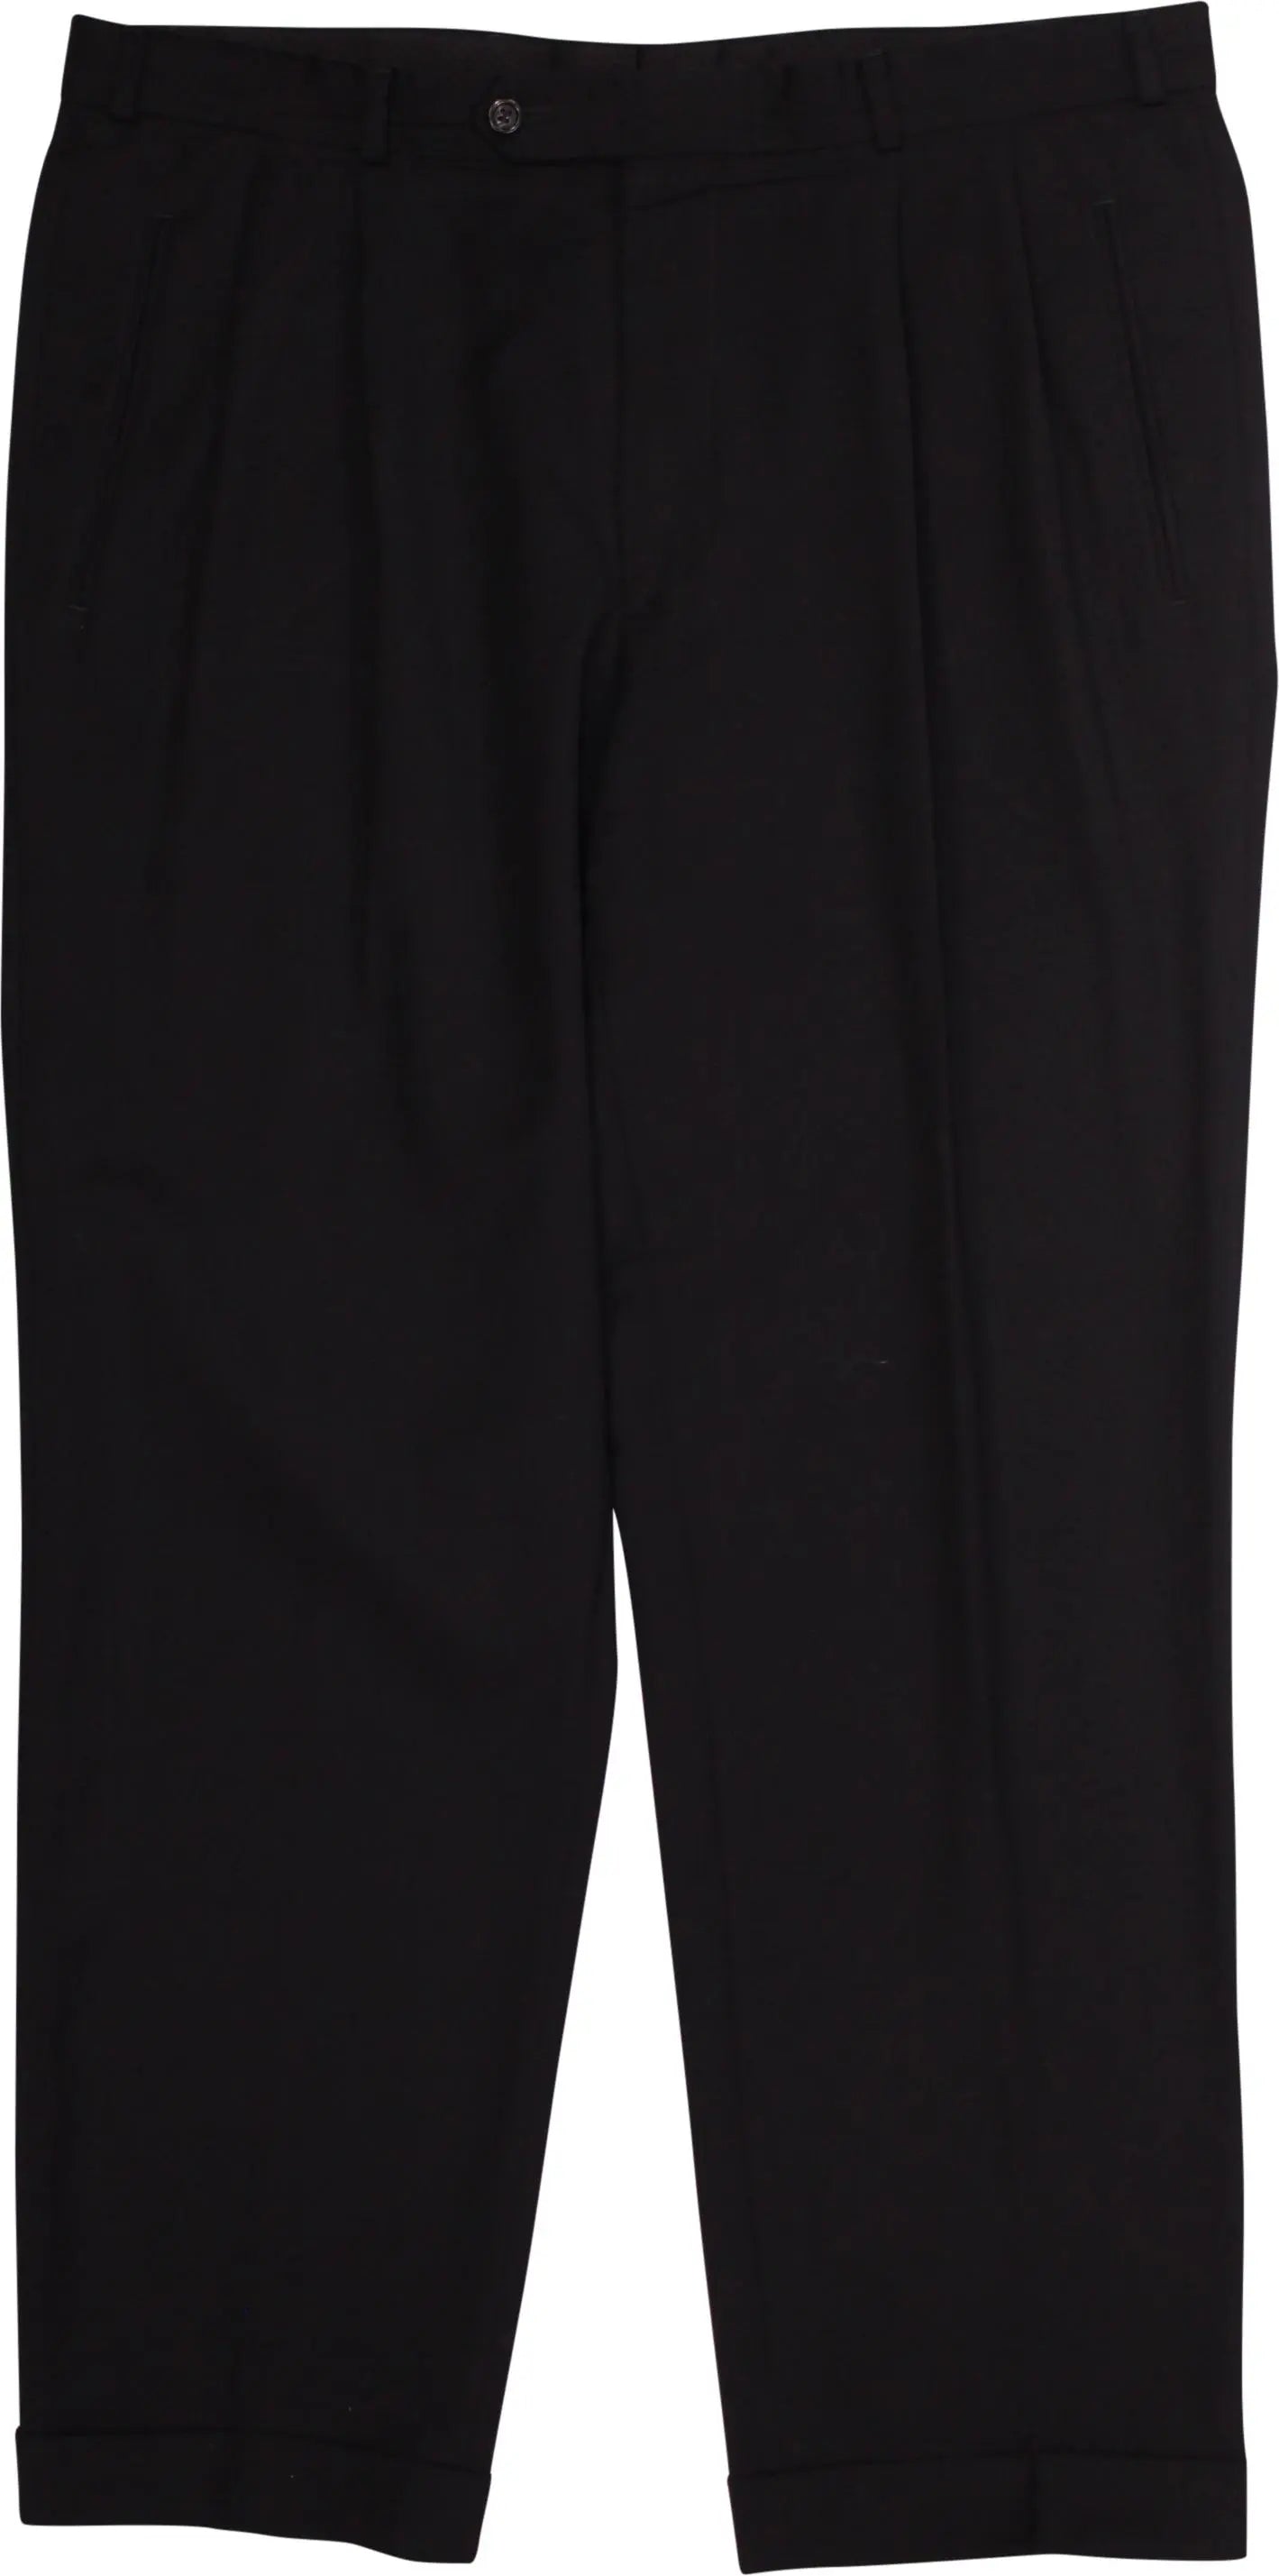 Yves Saint Laurent - Black Yves Saint Laurent Trousers- ThriftTale.com - Vintage and second handclothing